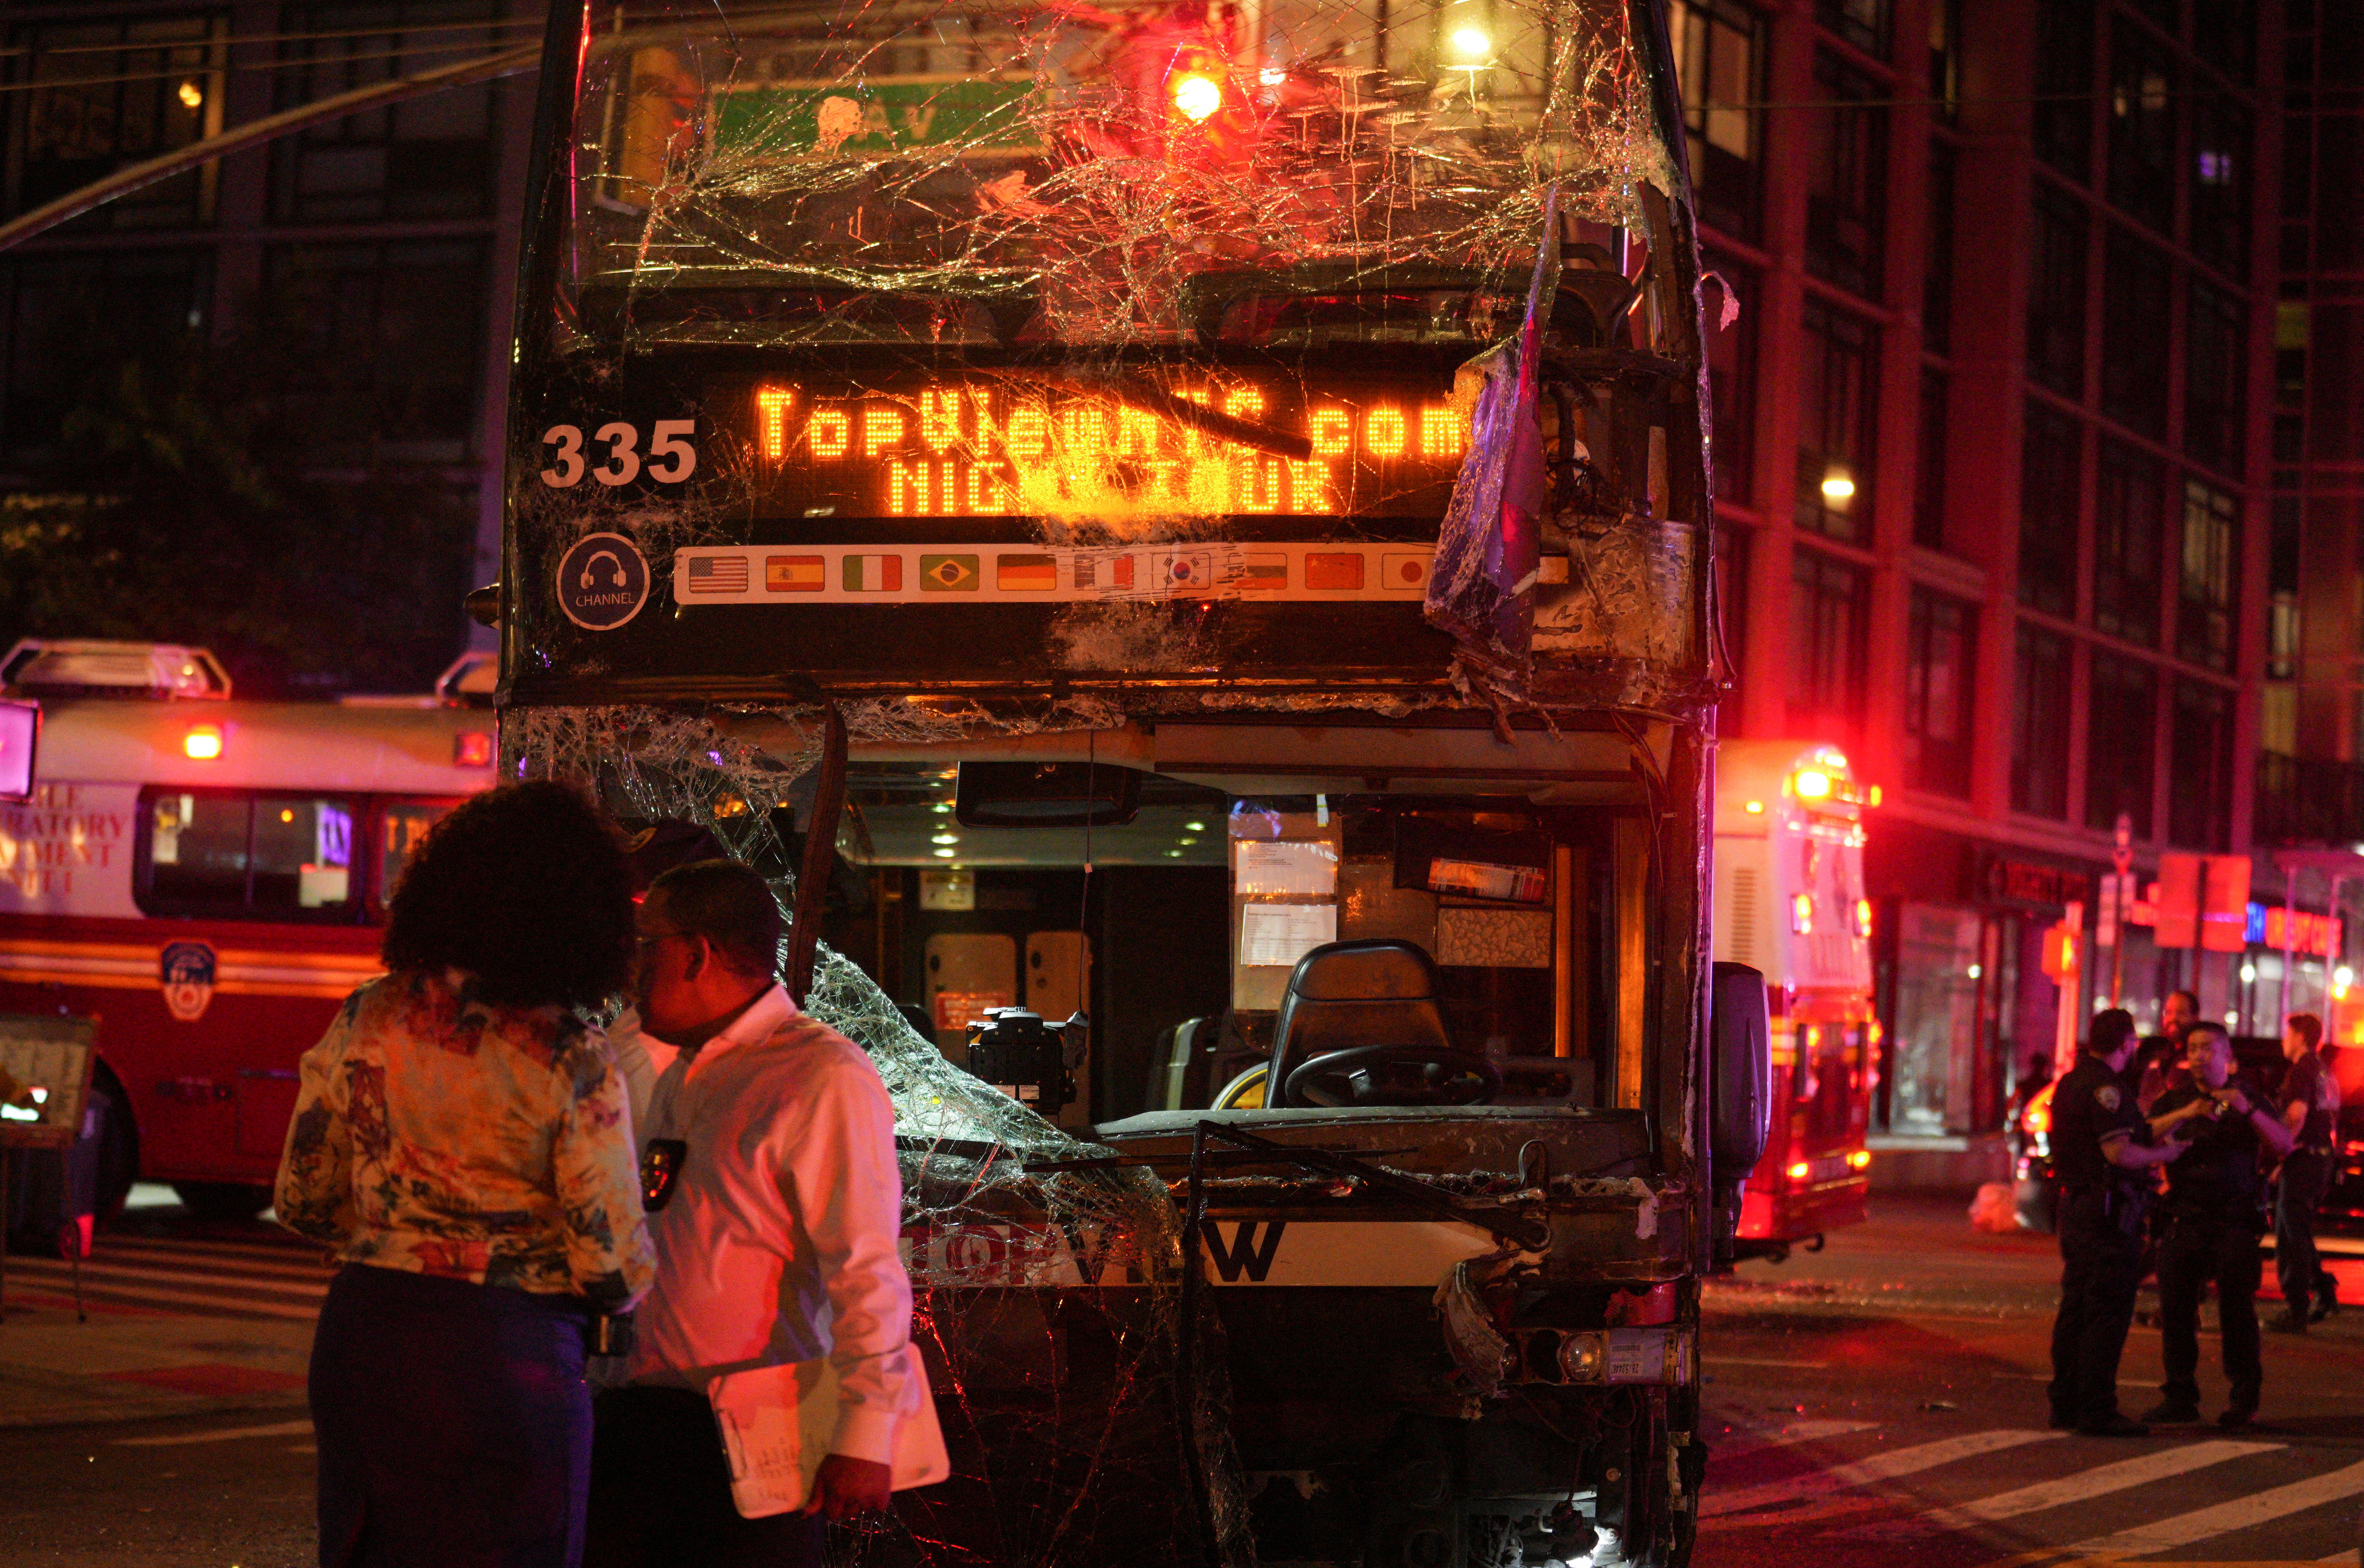 Bus crash in New York City